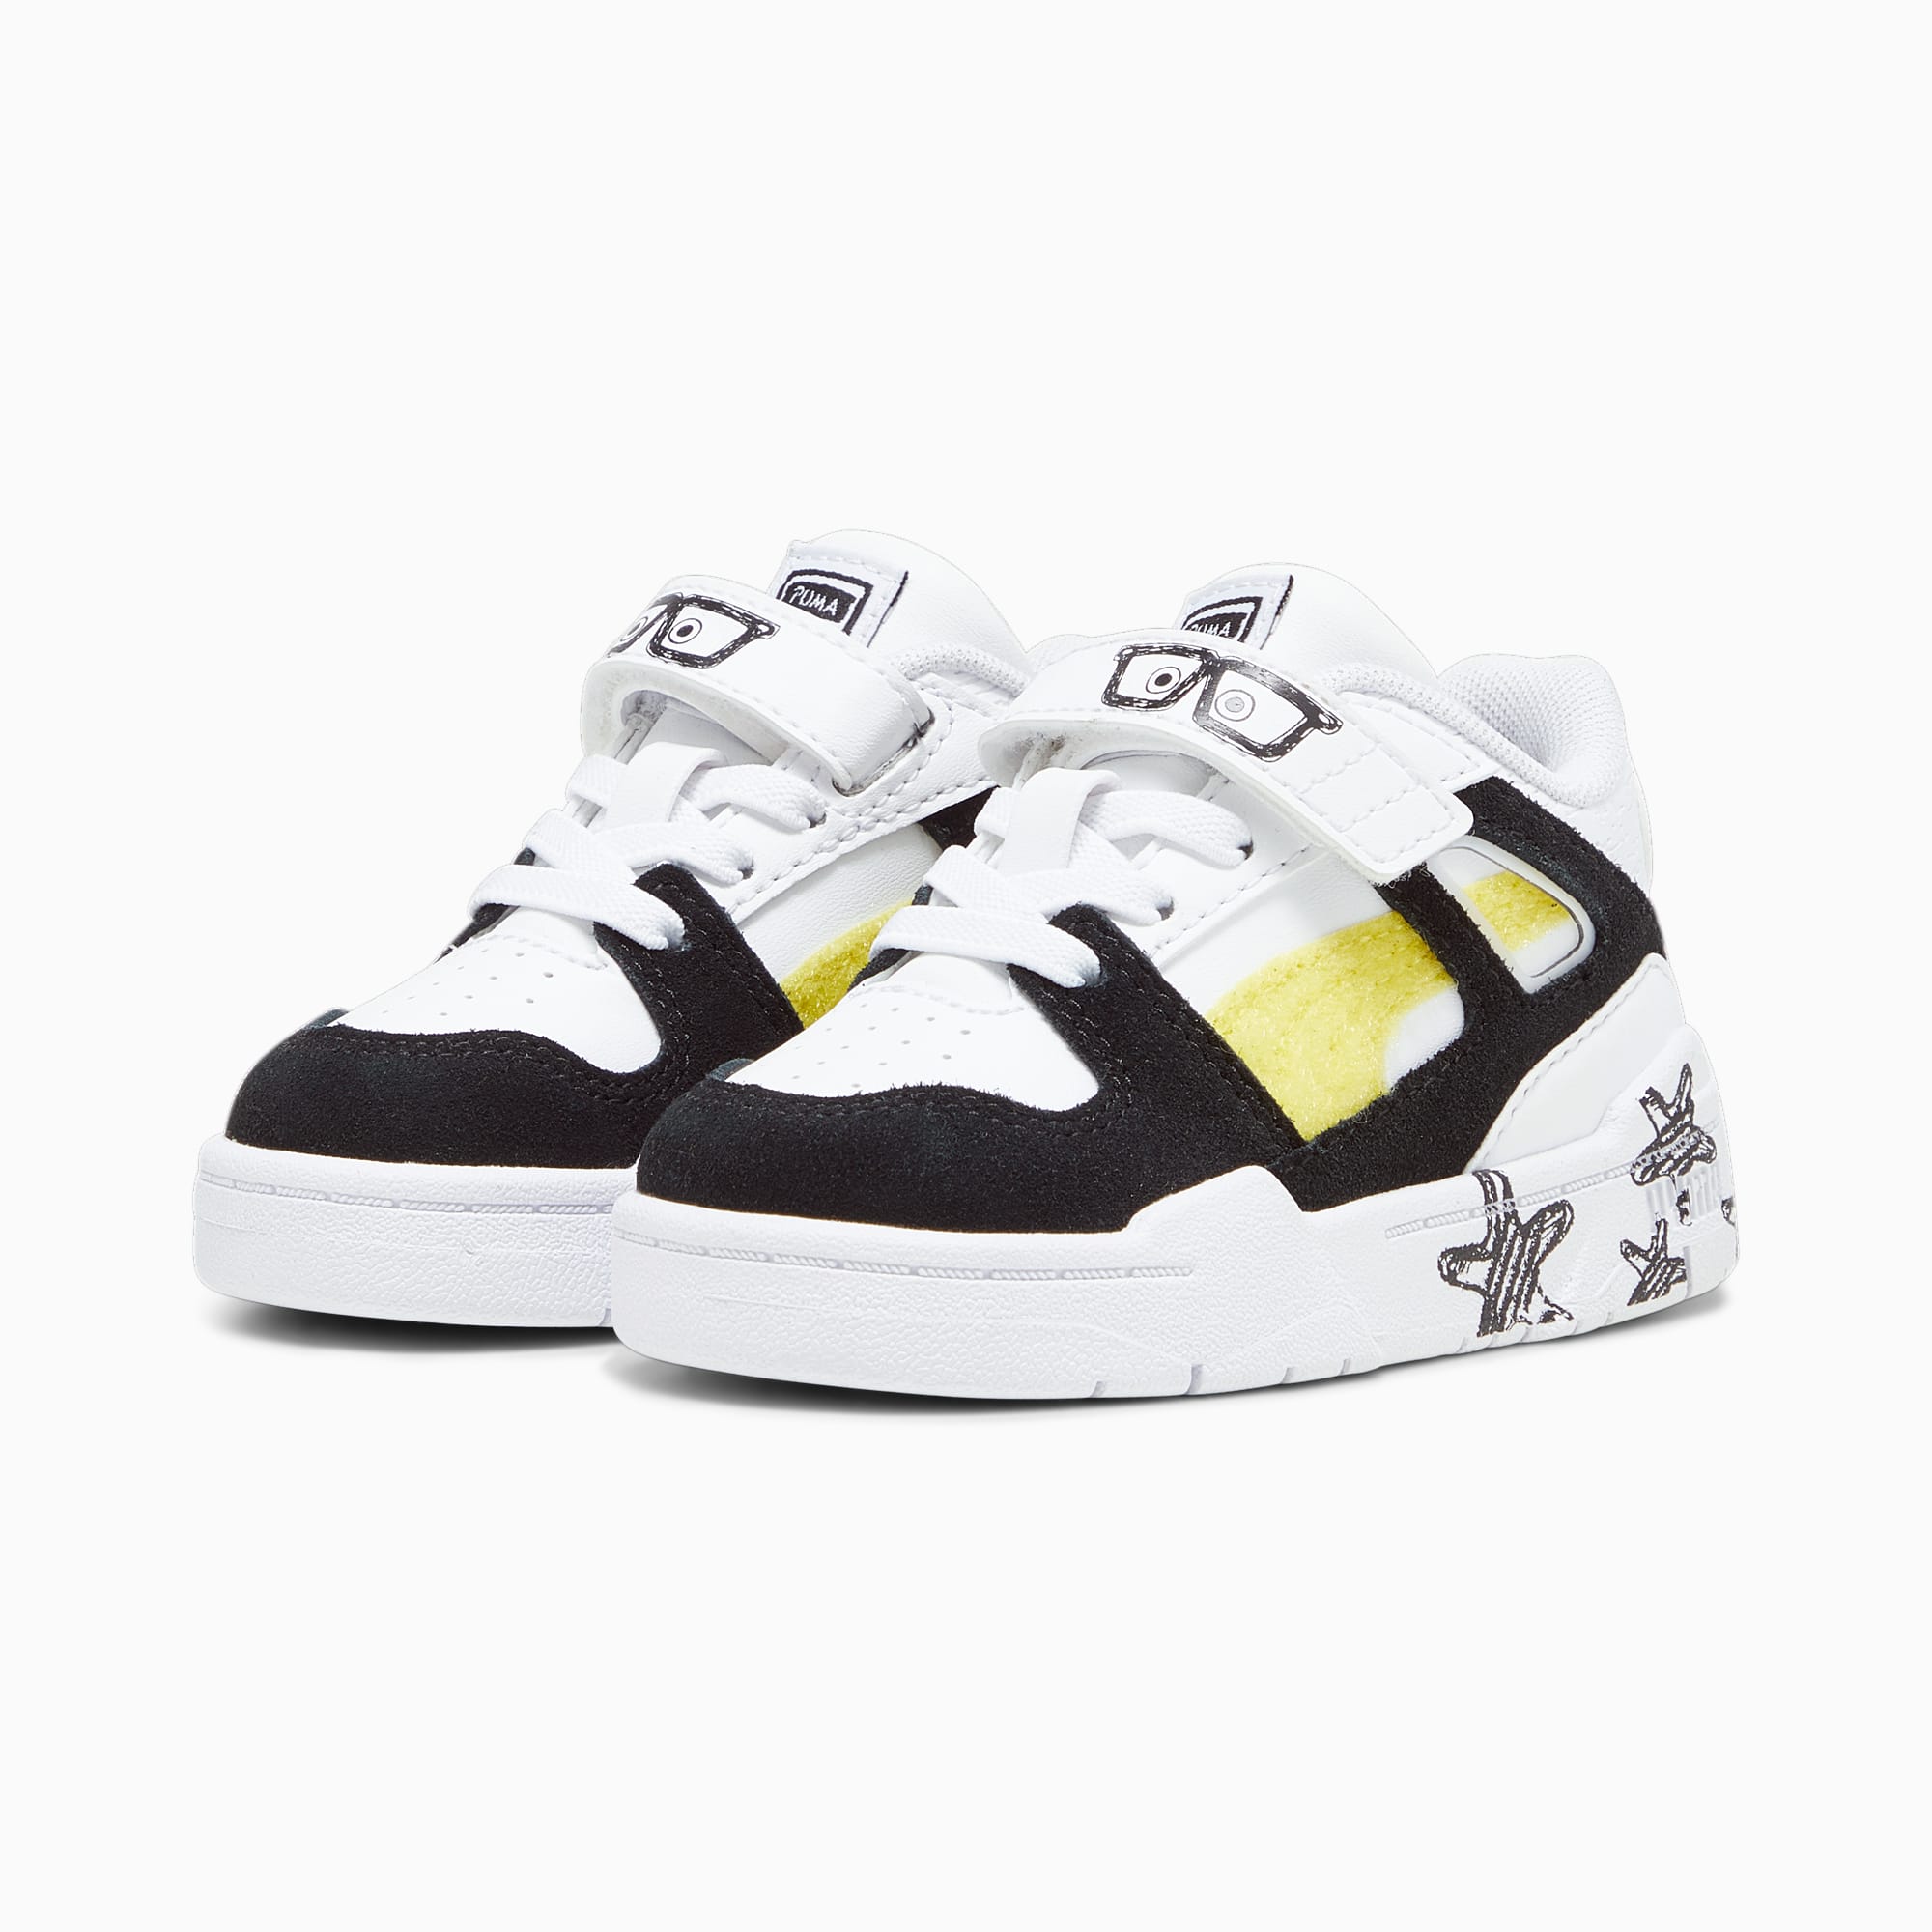 PUMA X Spongebob Squarepants Slipstream Toddlers' Sneakers, White/Black, Size 19, Shoes